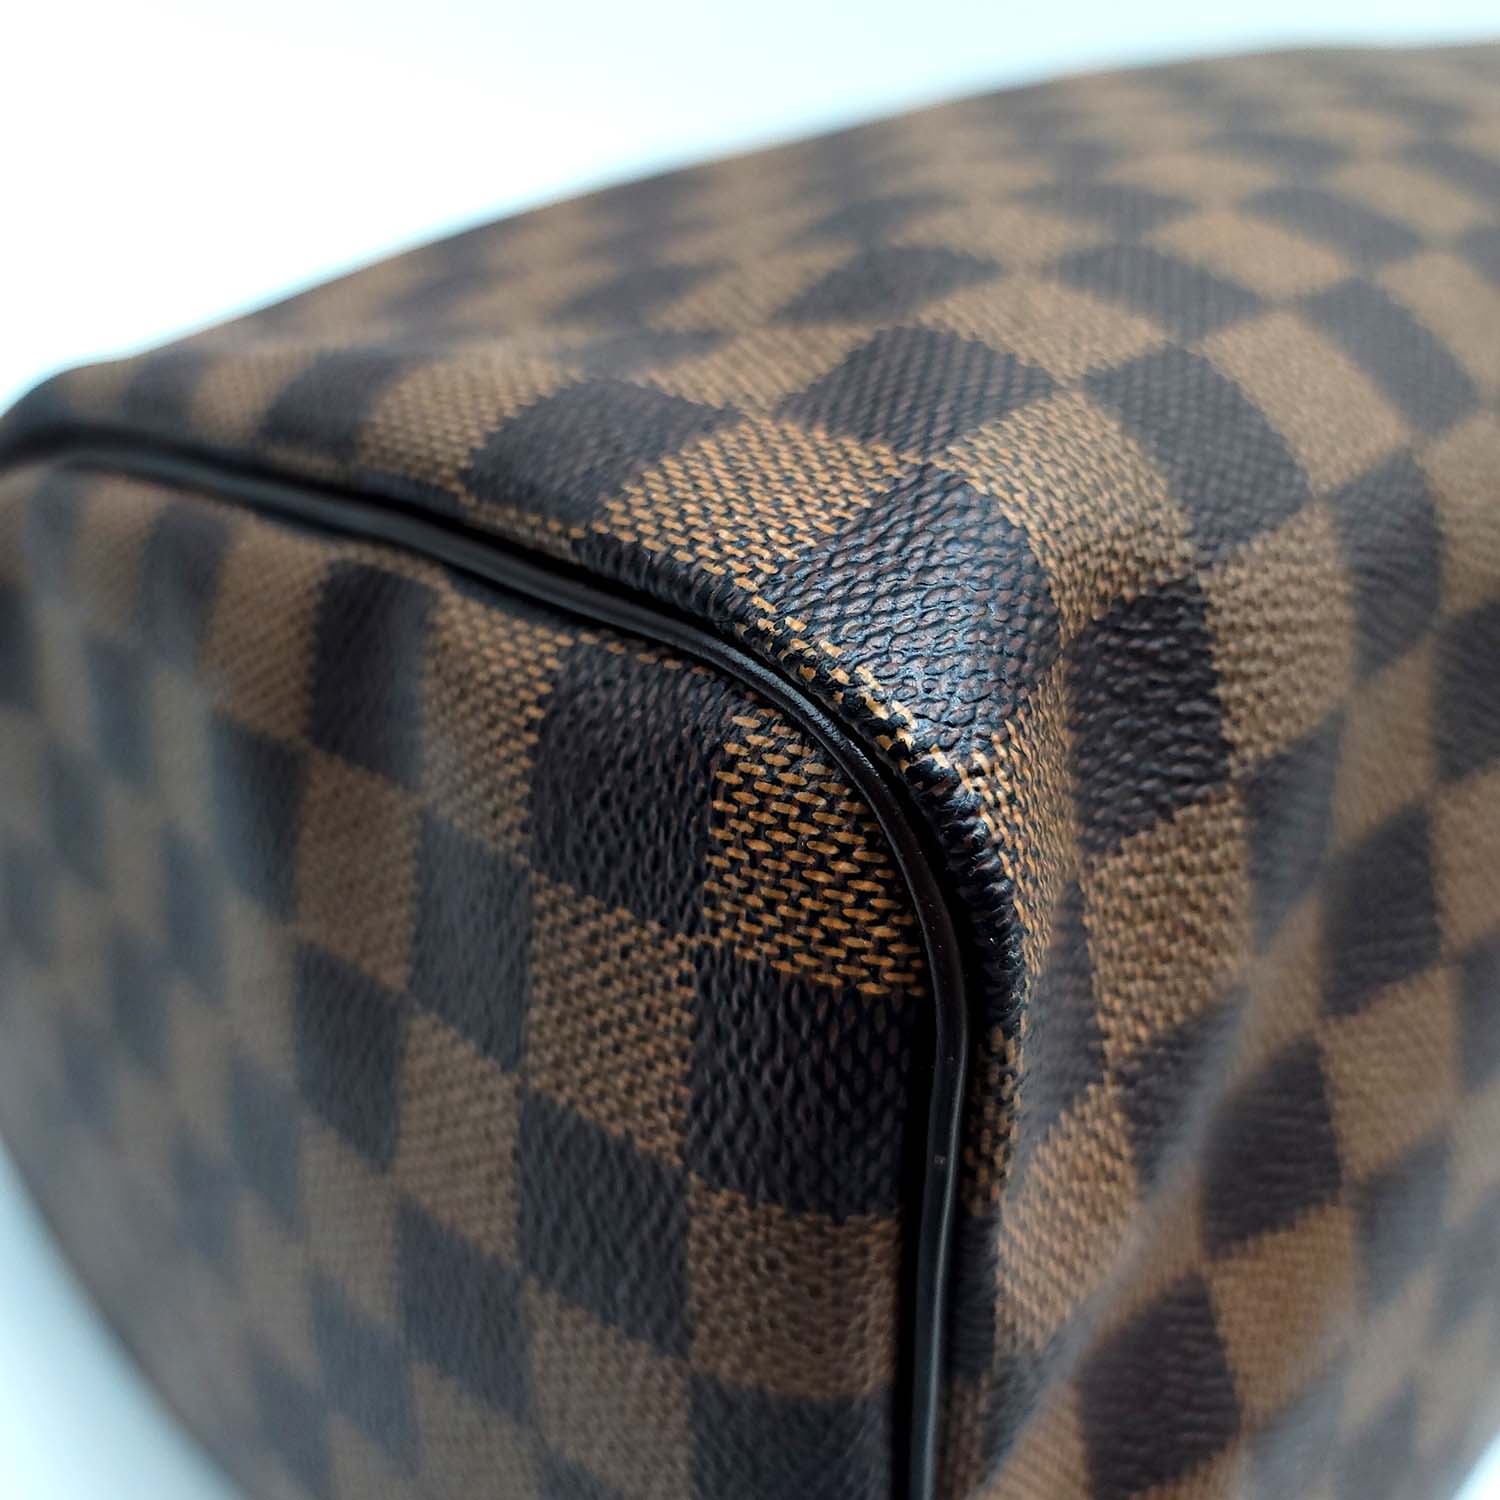 Louis Vuitton #43214 Damier Ebene Speedy 35 Handbag – ALL YOUR BLISS